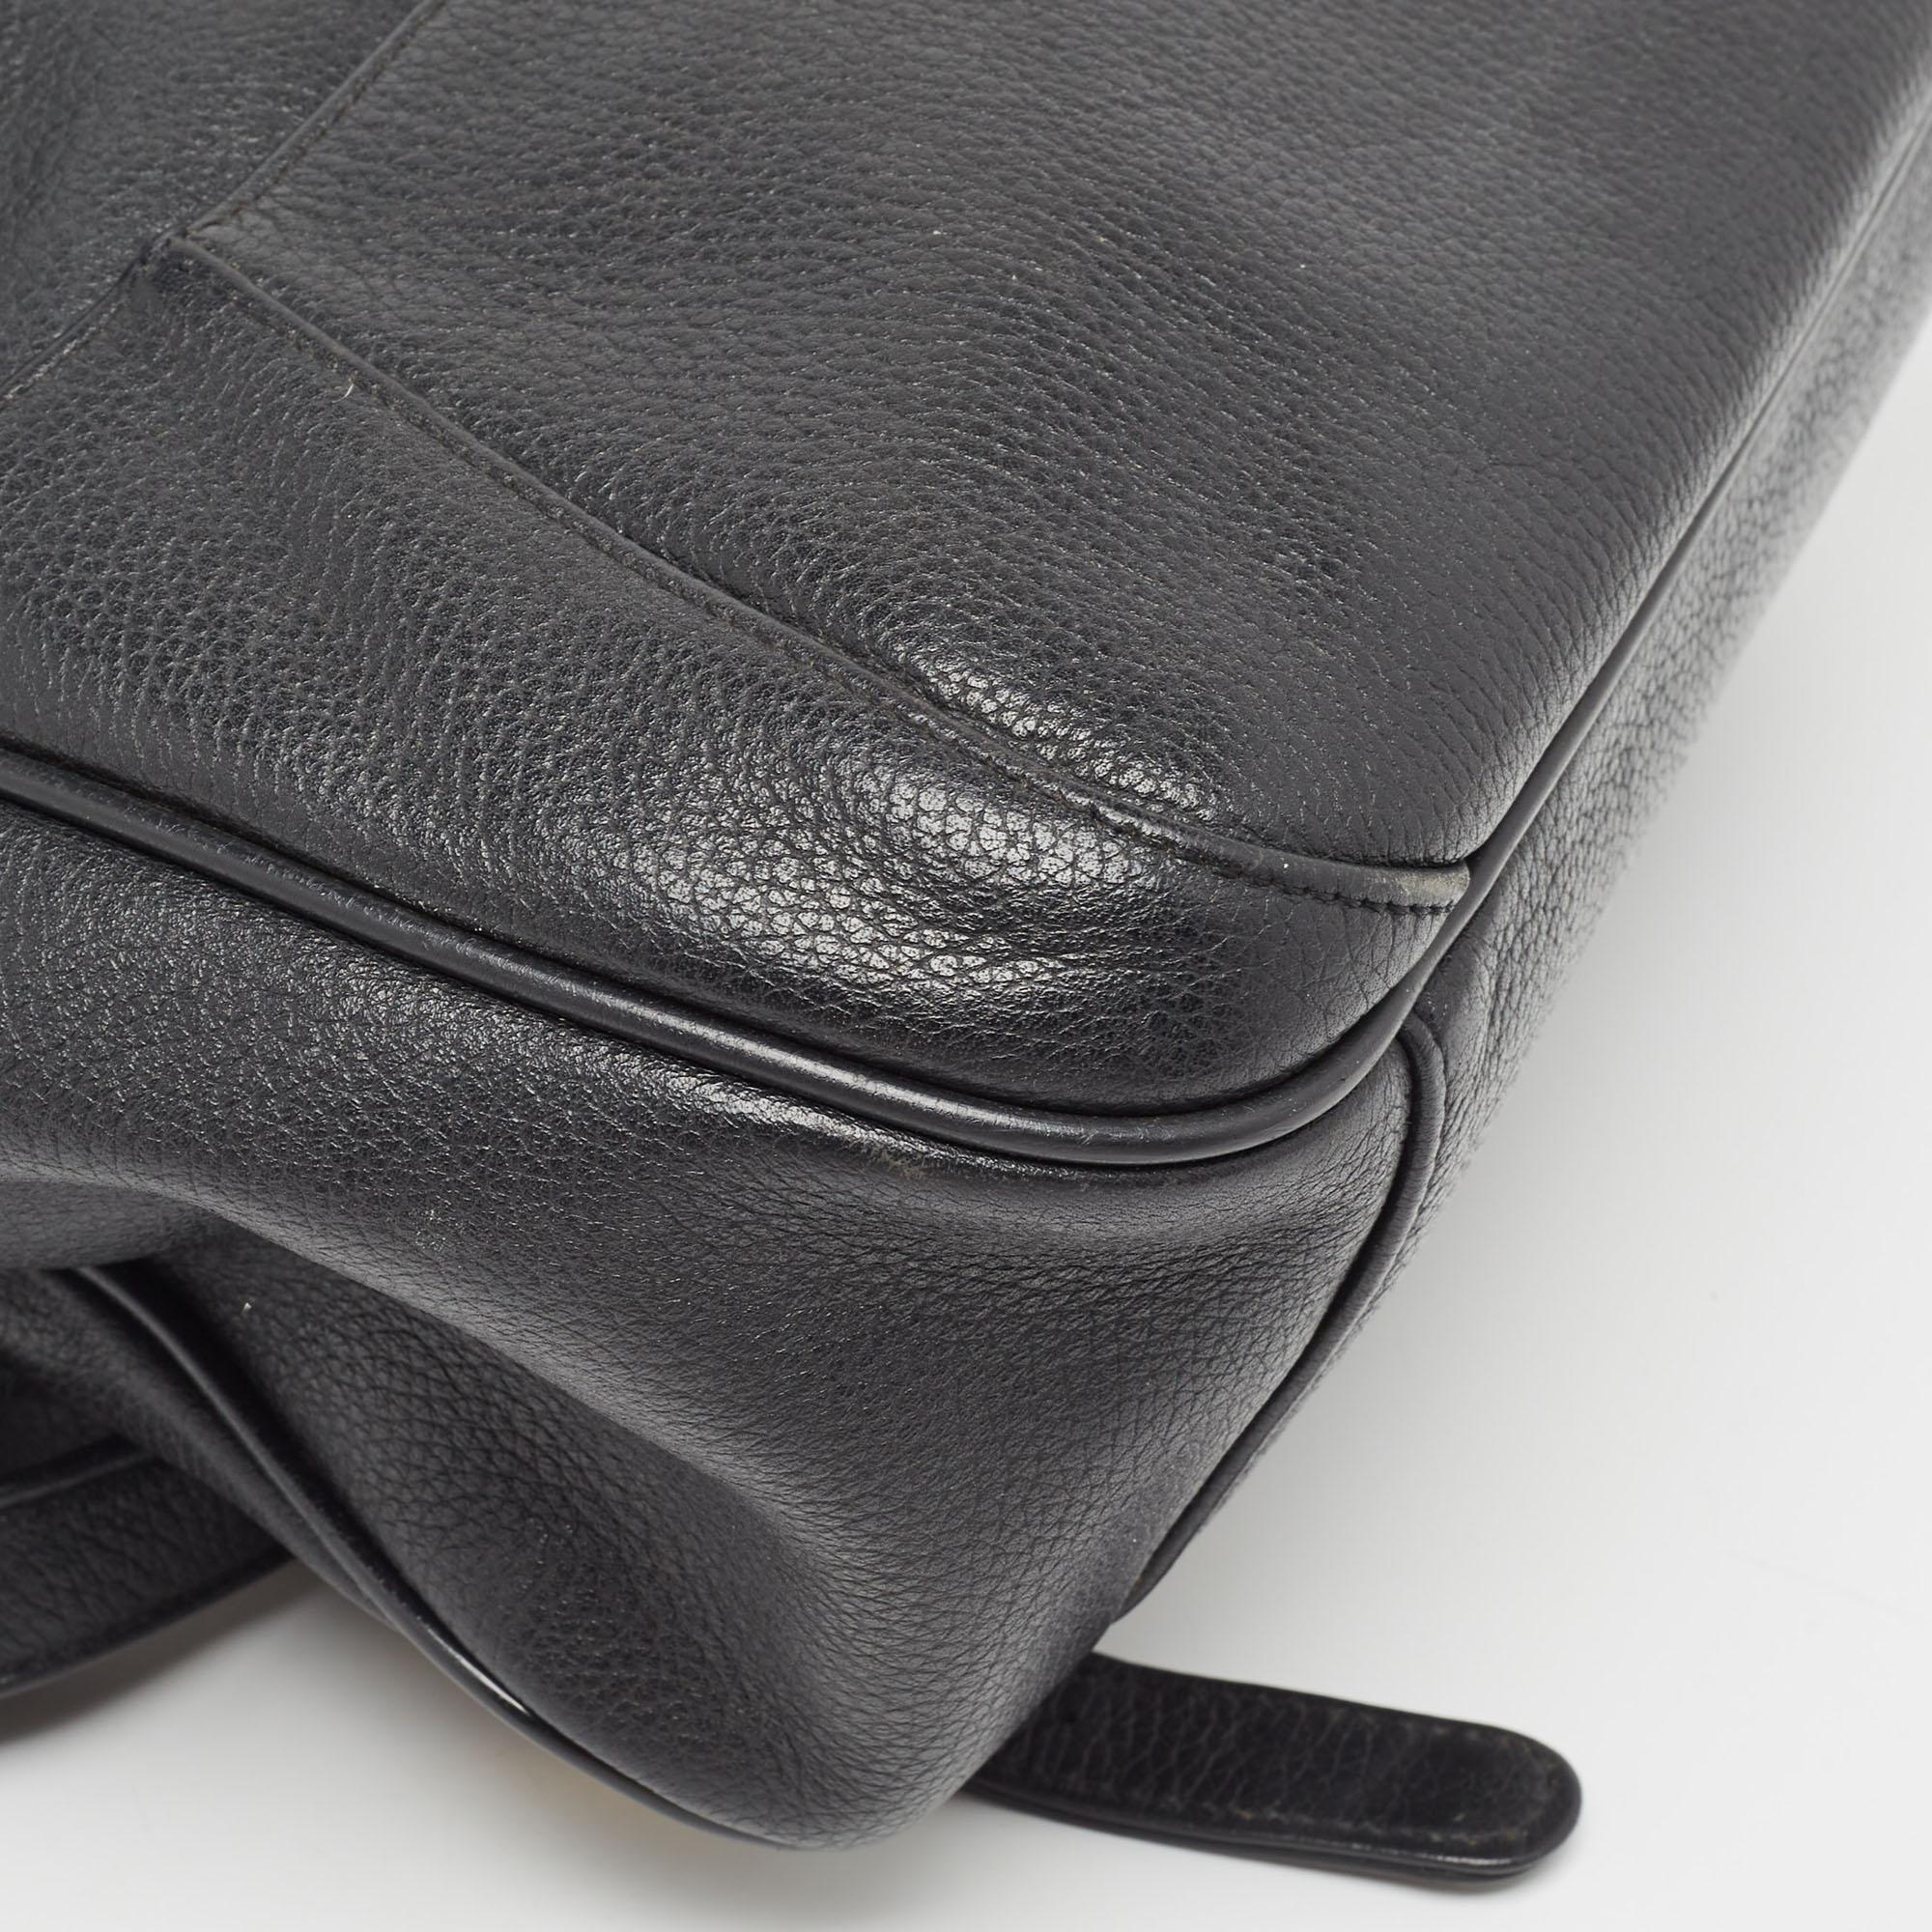 MCM Black Leather Studded Flap Backpack For Sale 4